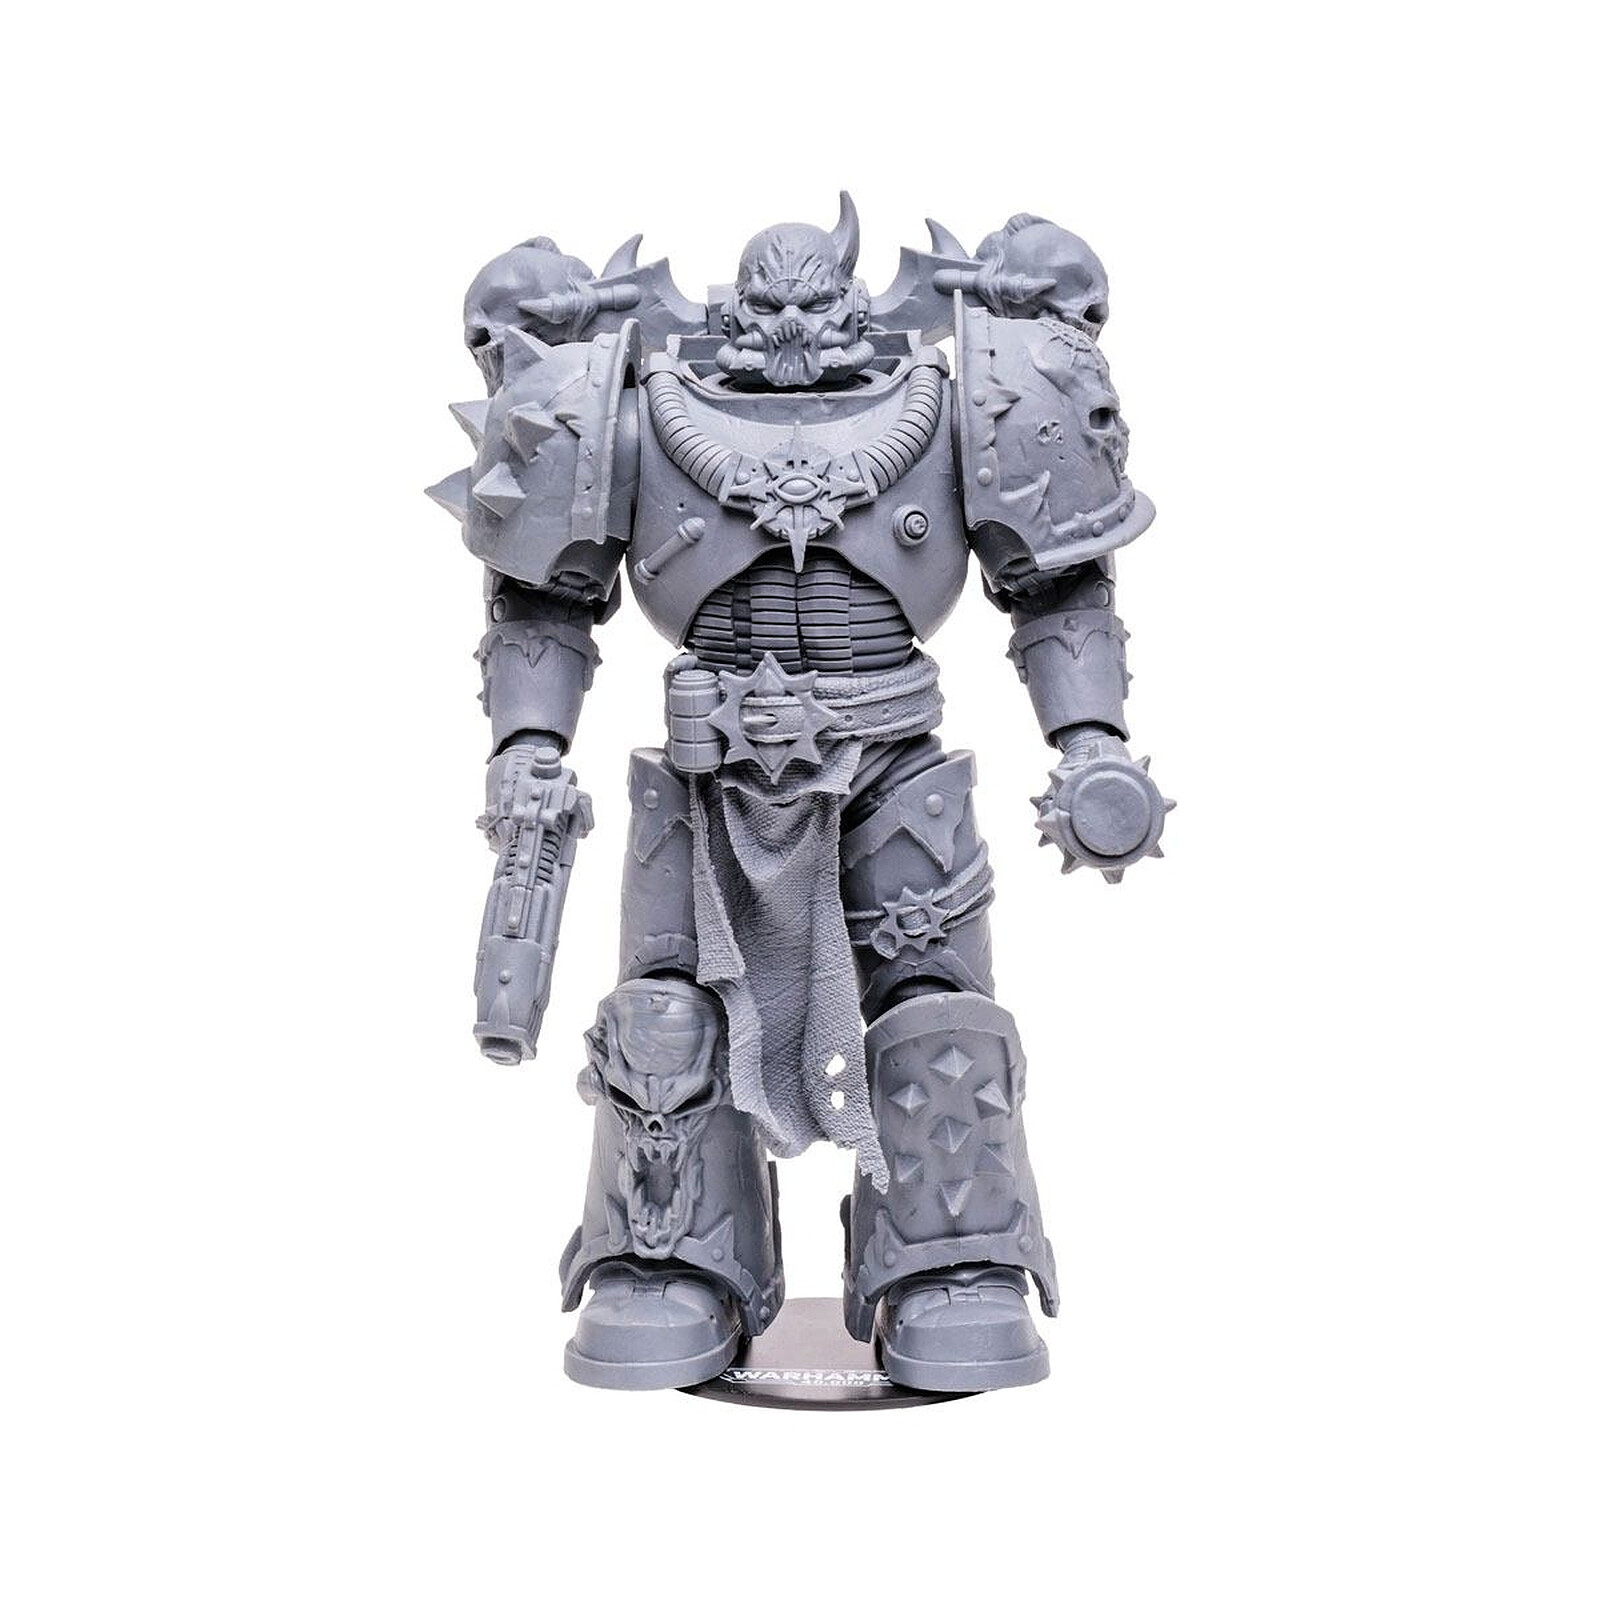 Warhammer 40k - Figurine Chaos Space Marine (Artist Proof) 18 cm - Figurines  - LDLC